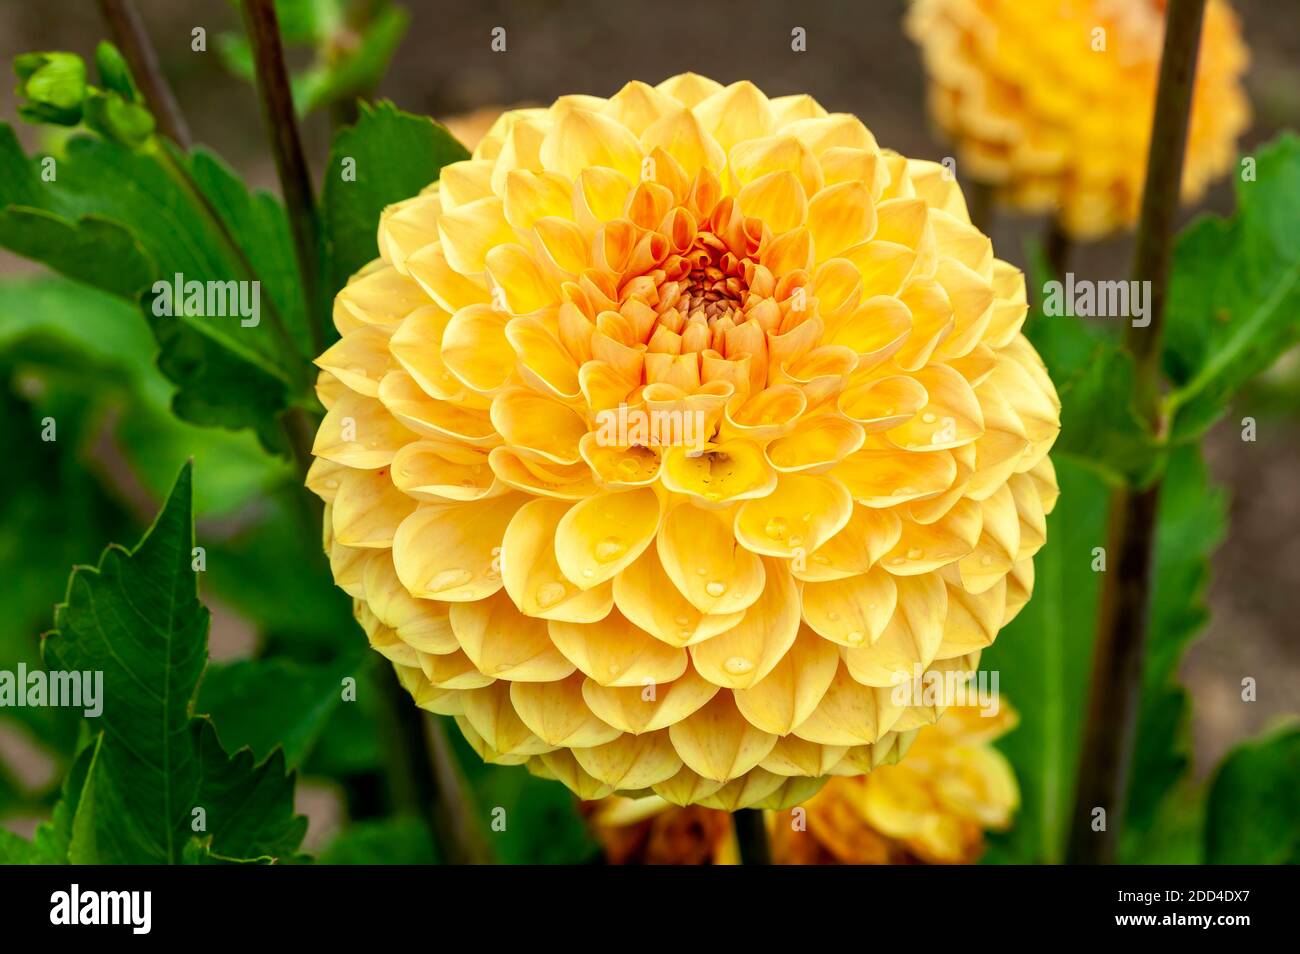 Dahlia 'Blyton Softer Gleam' a yellow orange summer pompom flower tuber plant, stock photo image Stock Photo